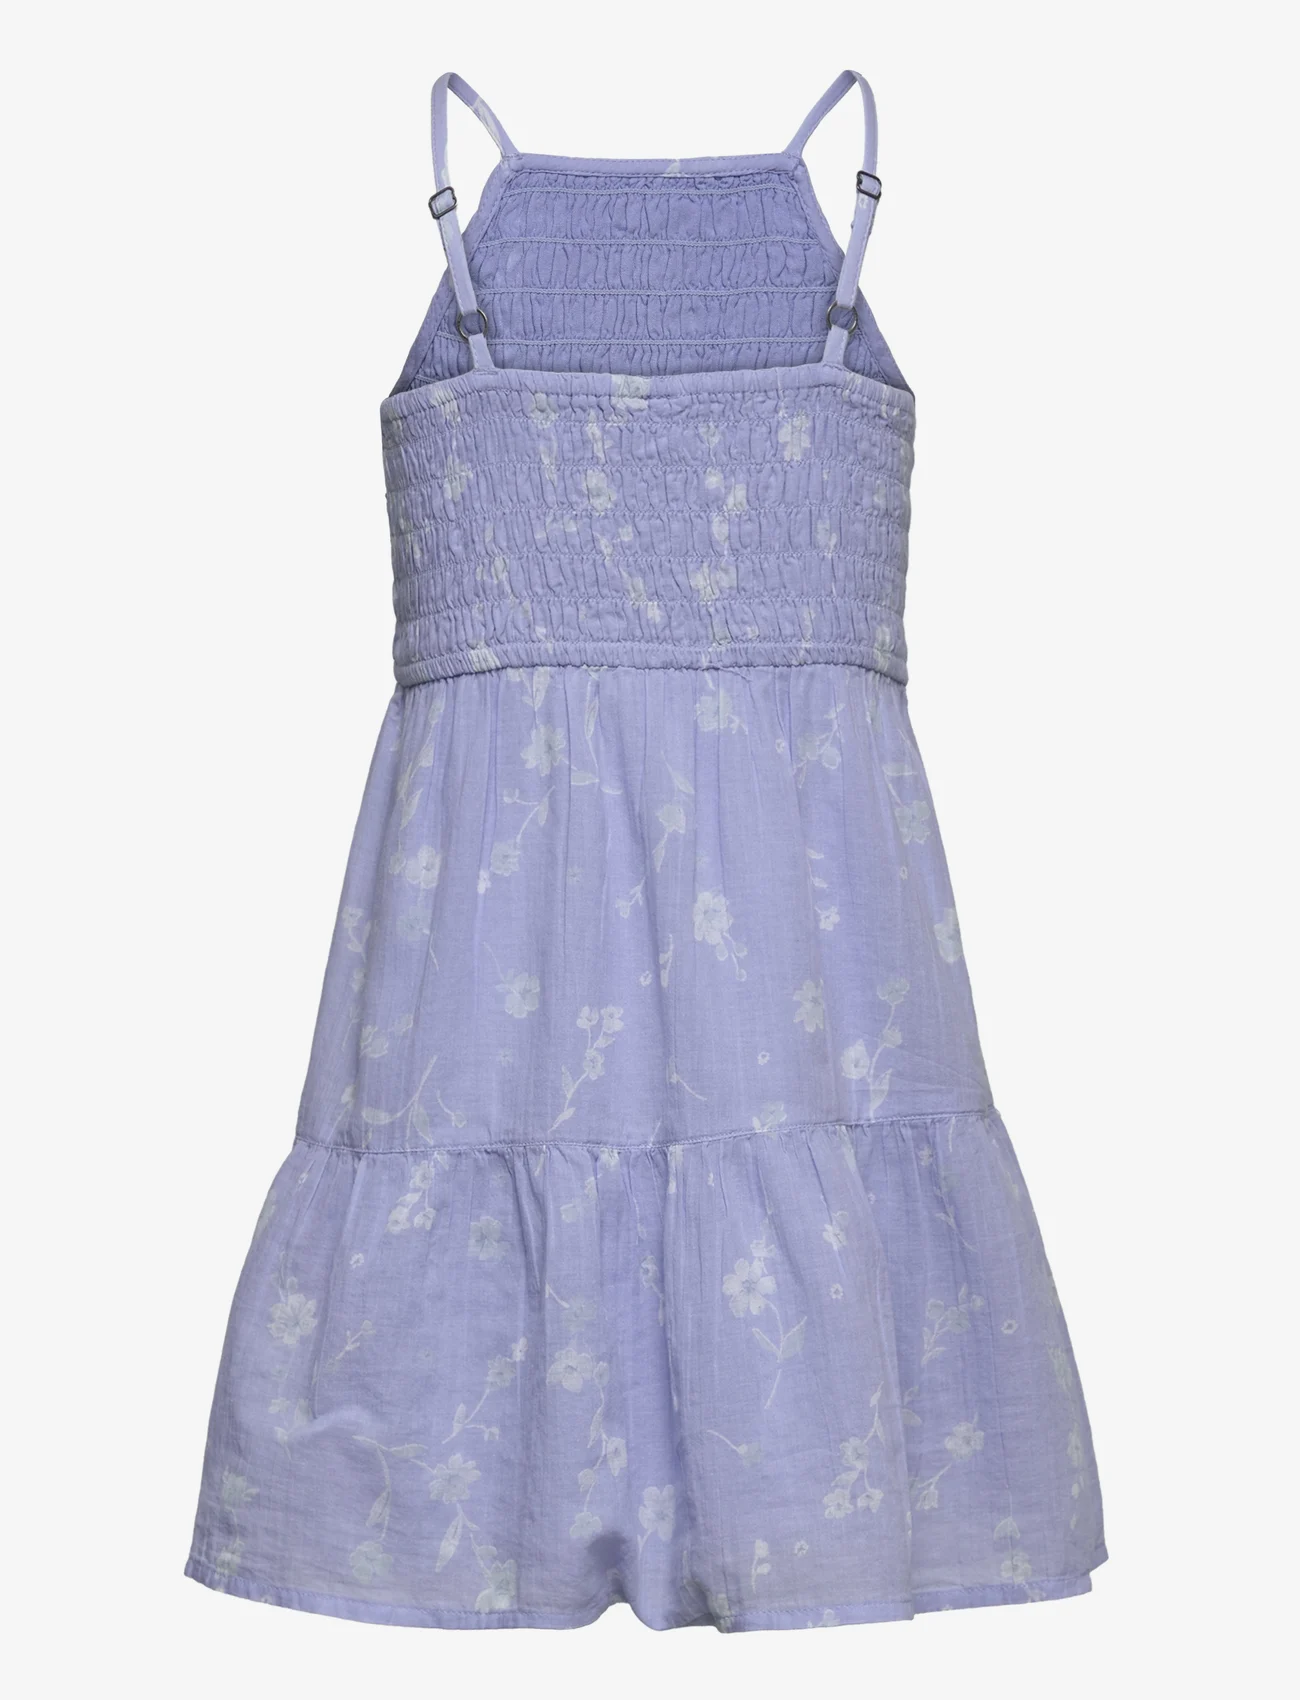 Abercrombie & Fitch - kids GIRLS DRESSES - kortermede hverdagskjoler - blue floral - 1